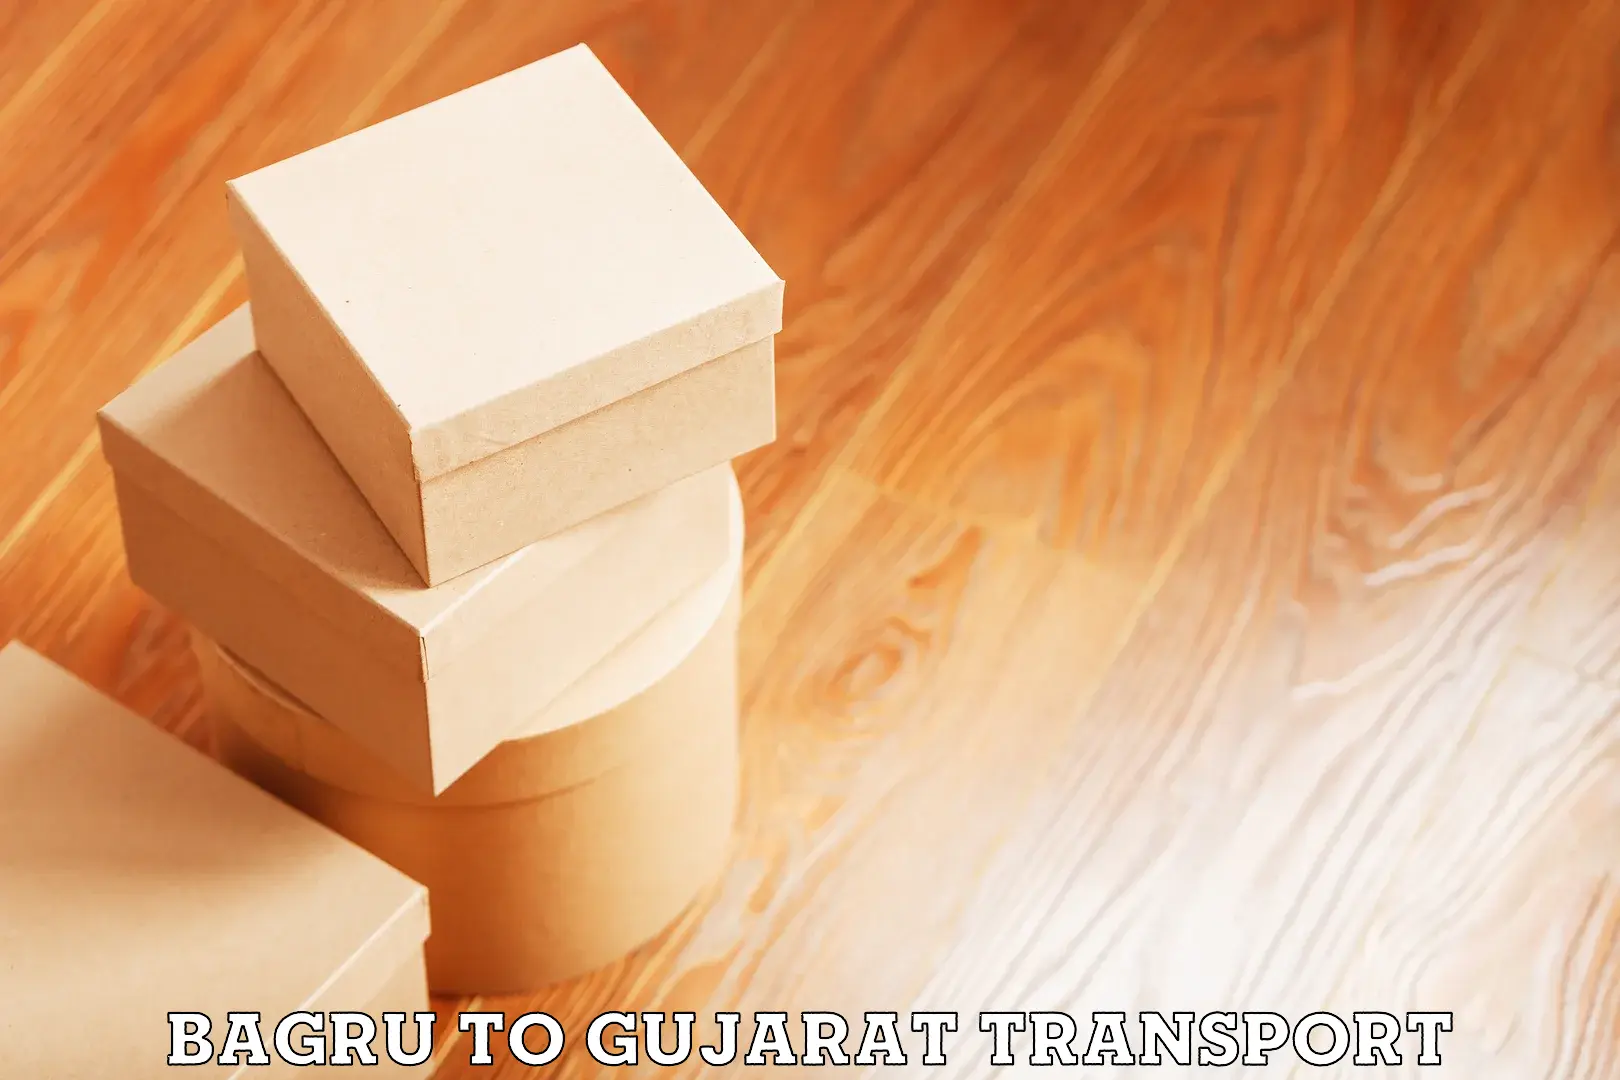 Daily transport service Bagru to Gujarat